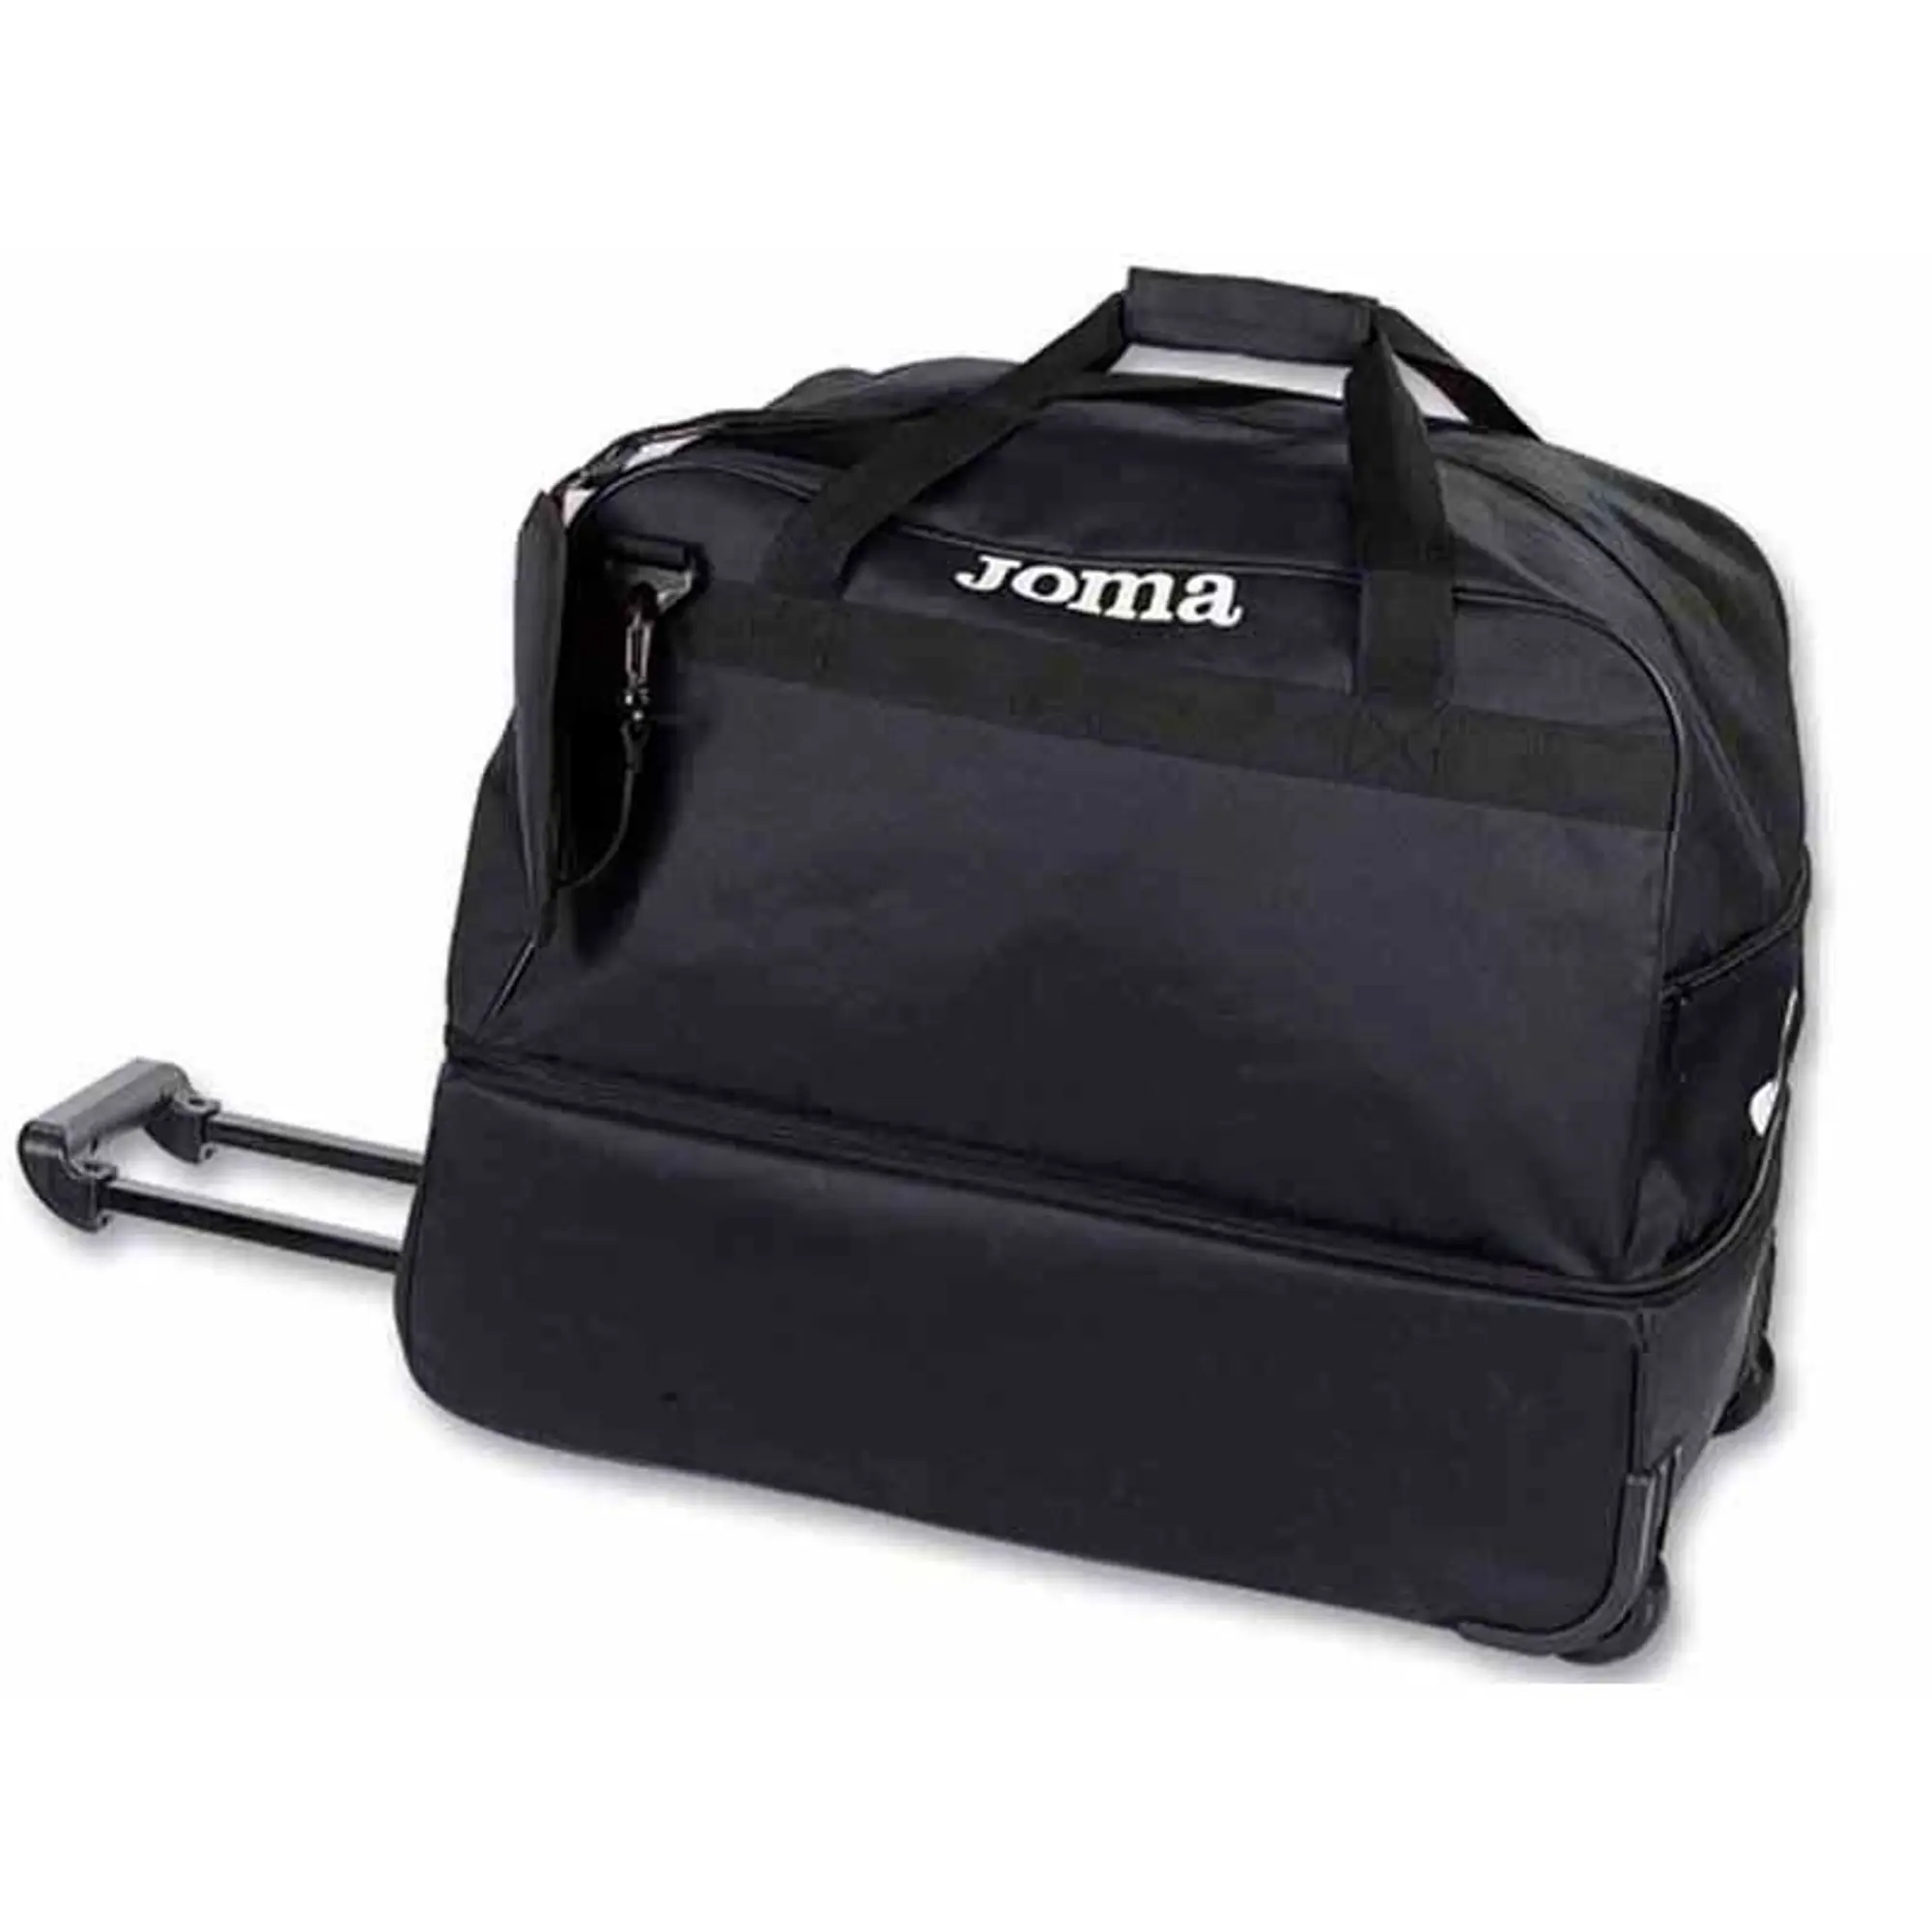 Joma Training Bag  - Black